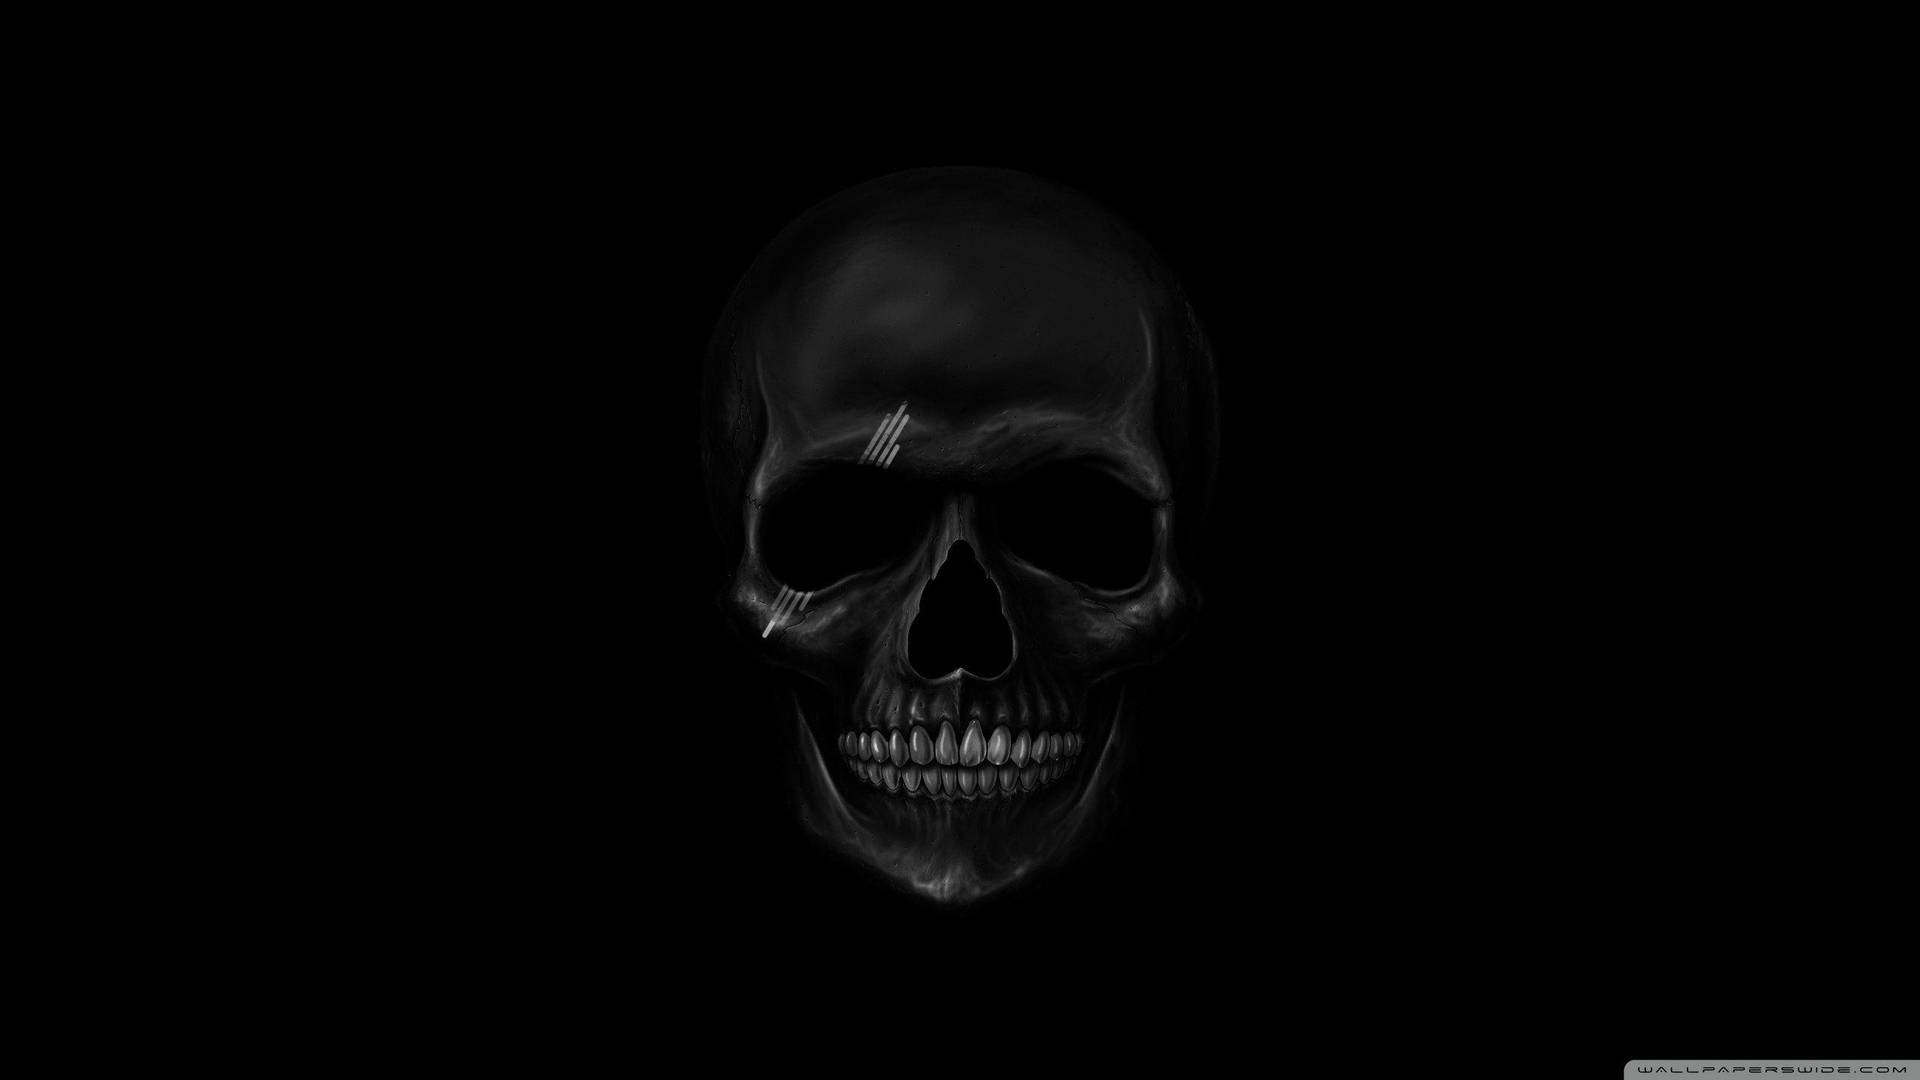 100+] Black Skull Wallpapers